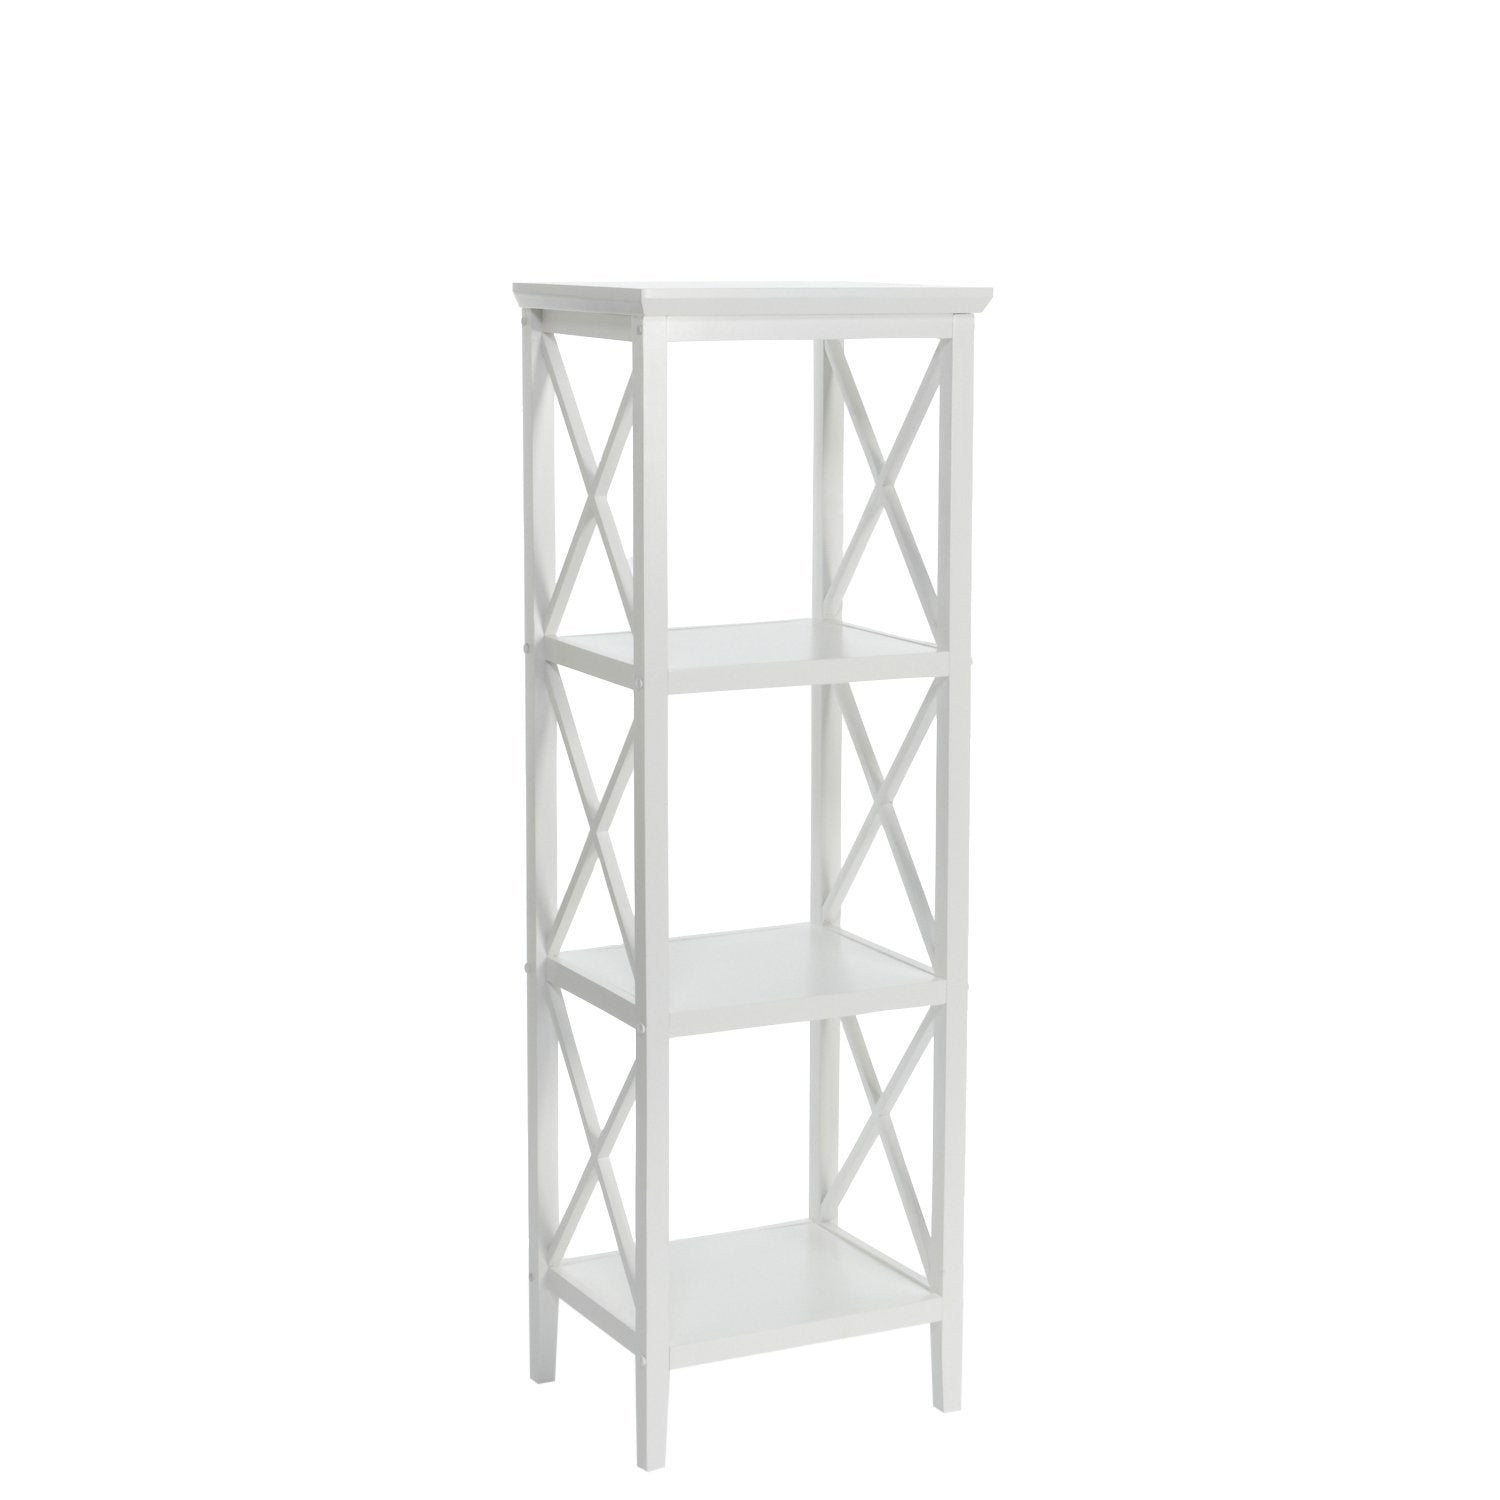 RiverRidge X- Frame Collection 4-Shelf Storage Tower, White